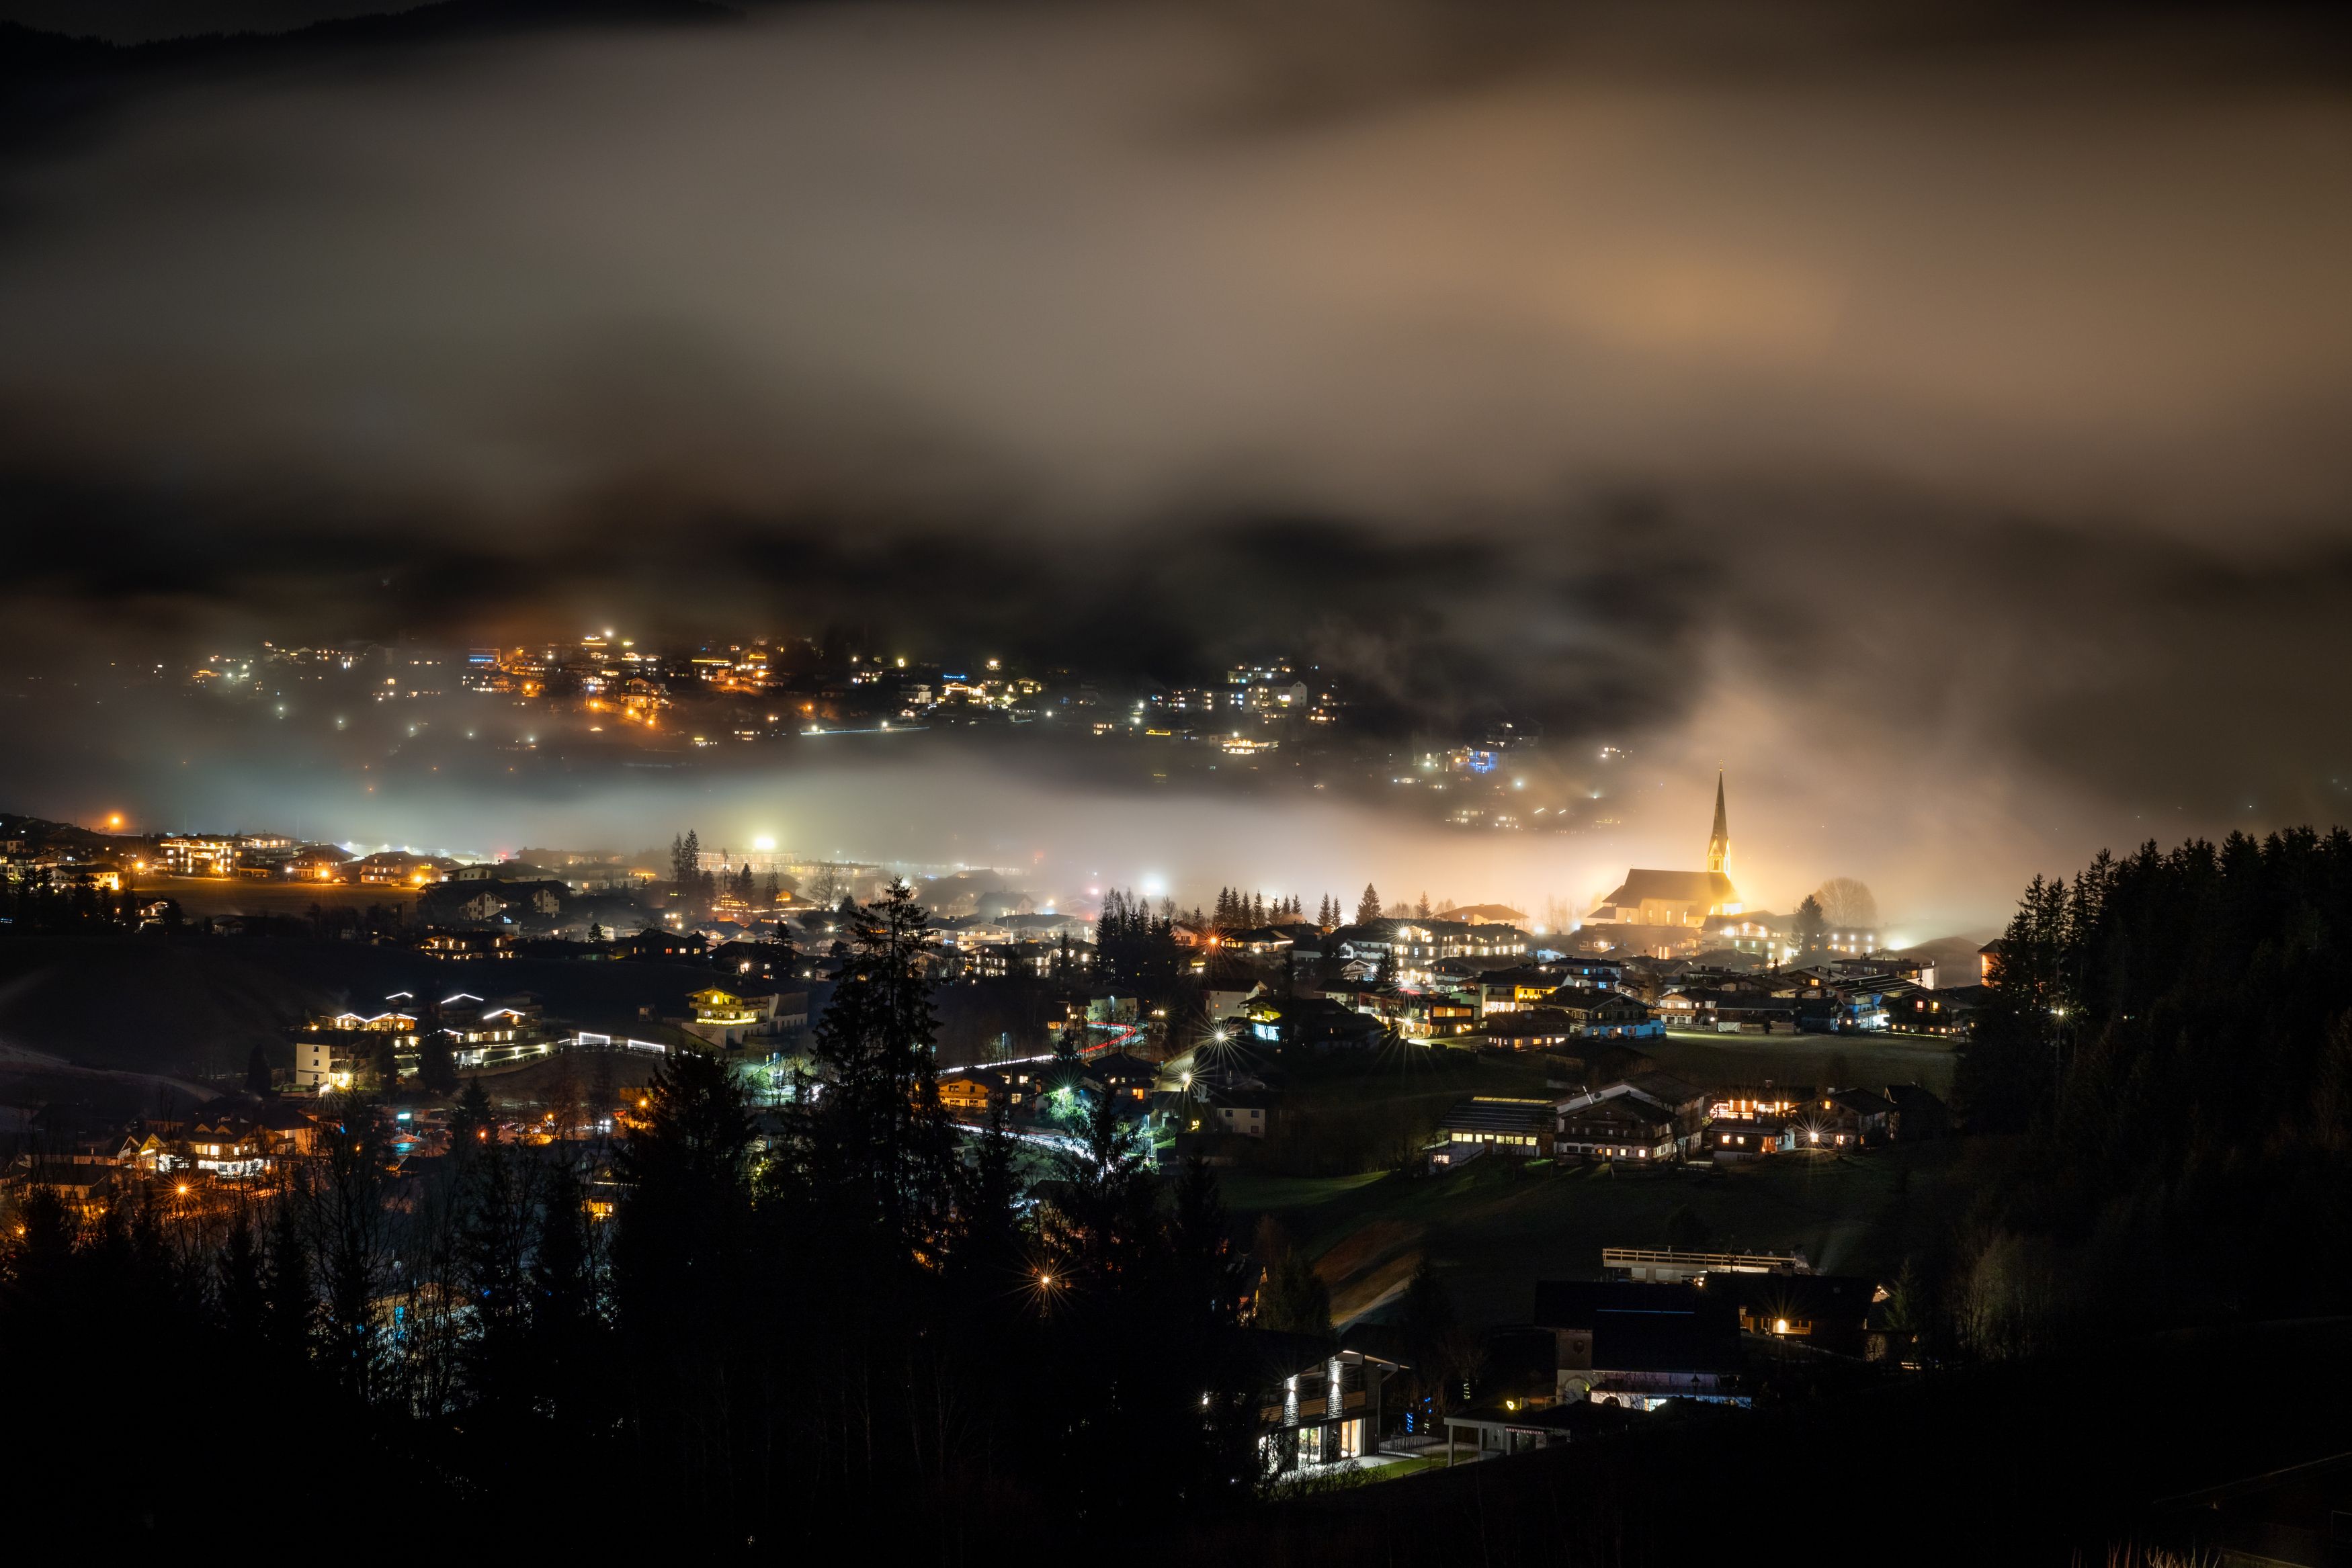 fog, village, night, landscape, Kirchberg, Austria, winter, misty, mist, church, lights, Milan Ljubisavljevic